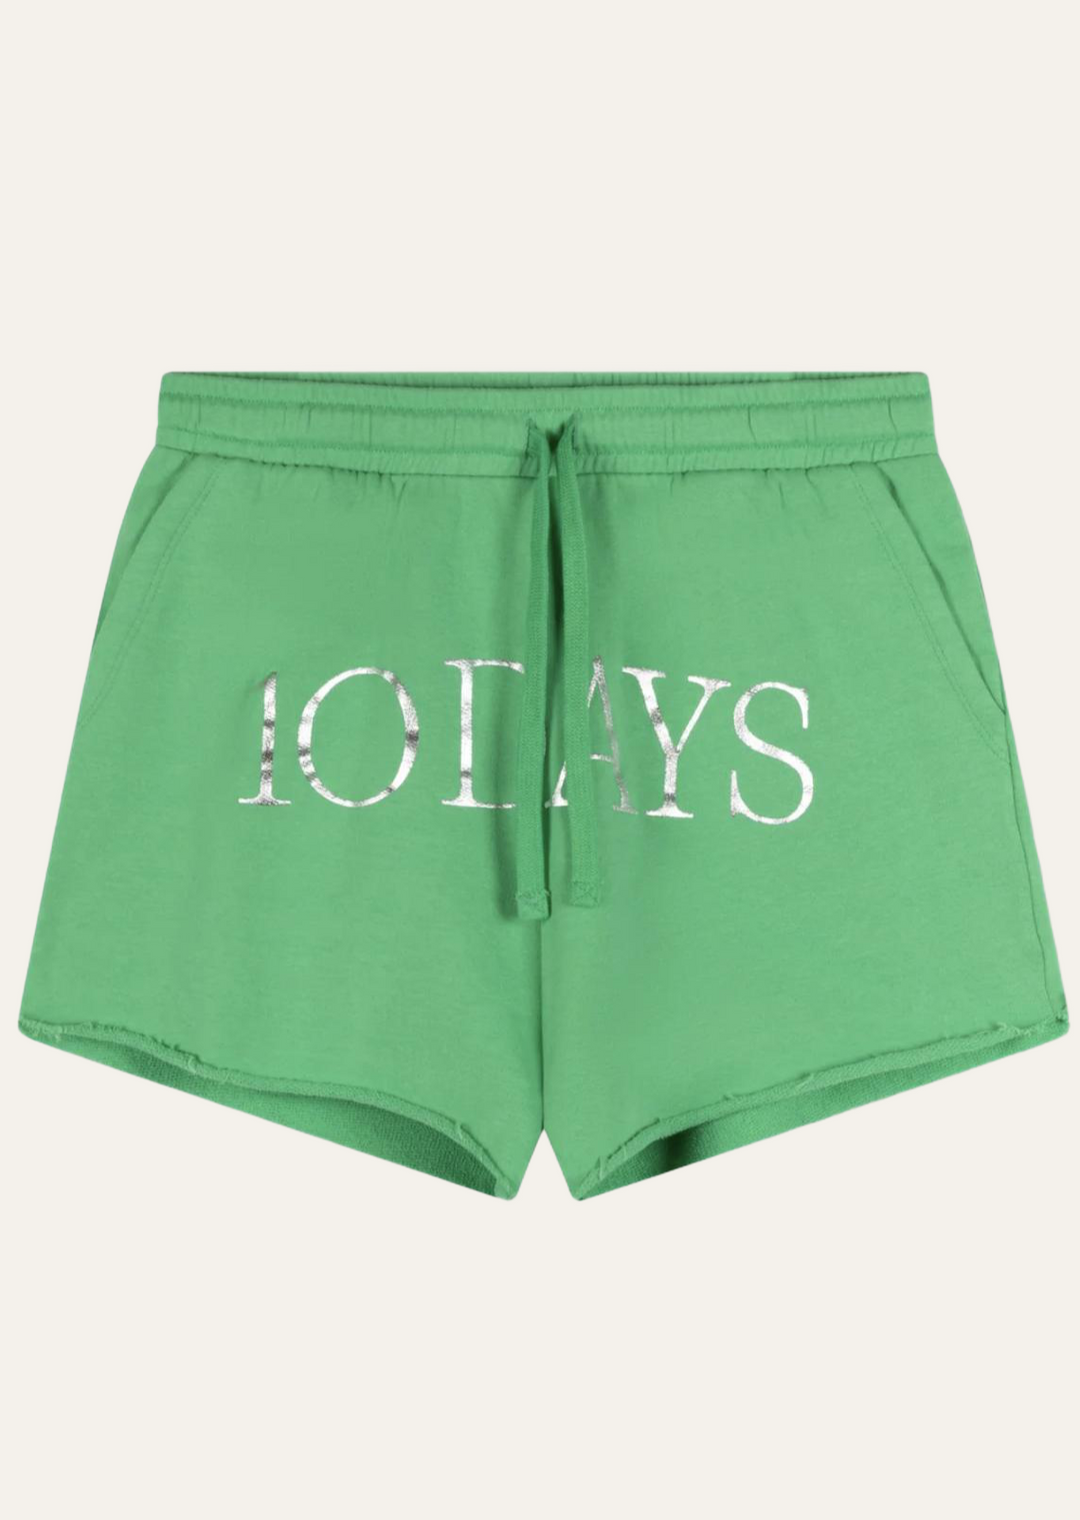 10Days Amsterdam - Beach shorts logo - green